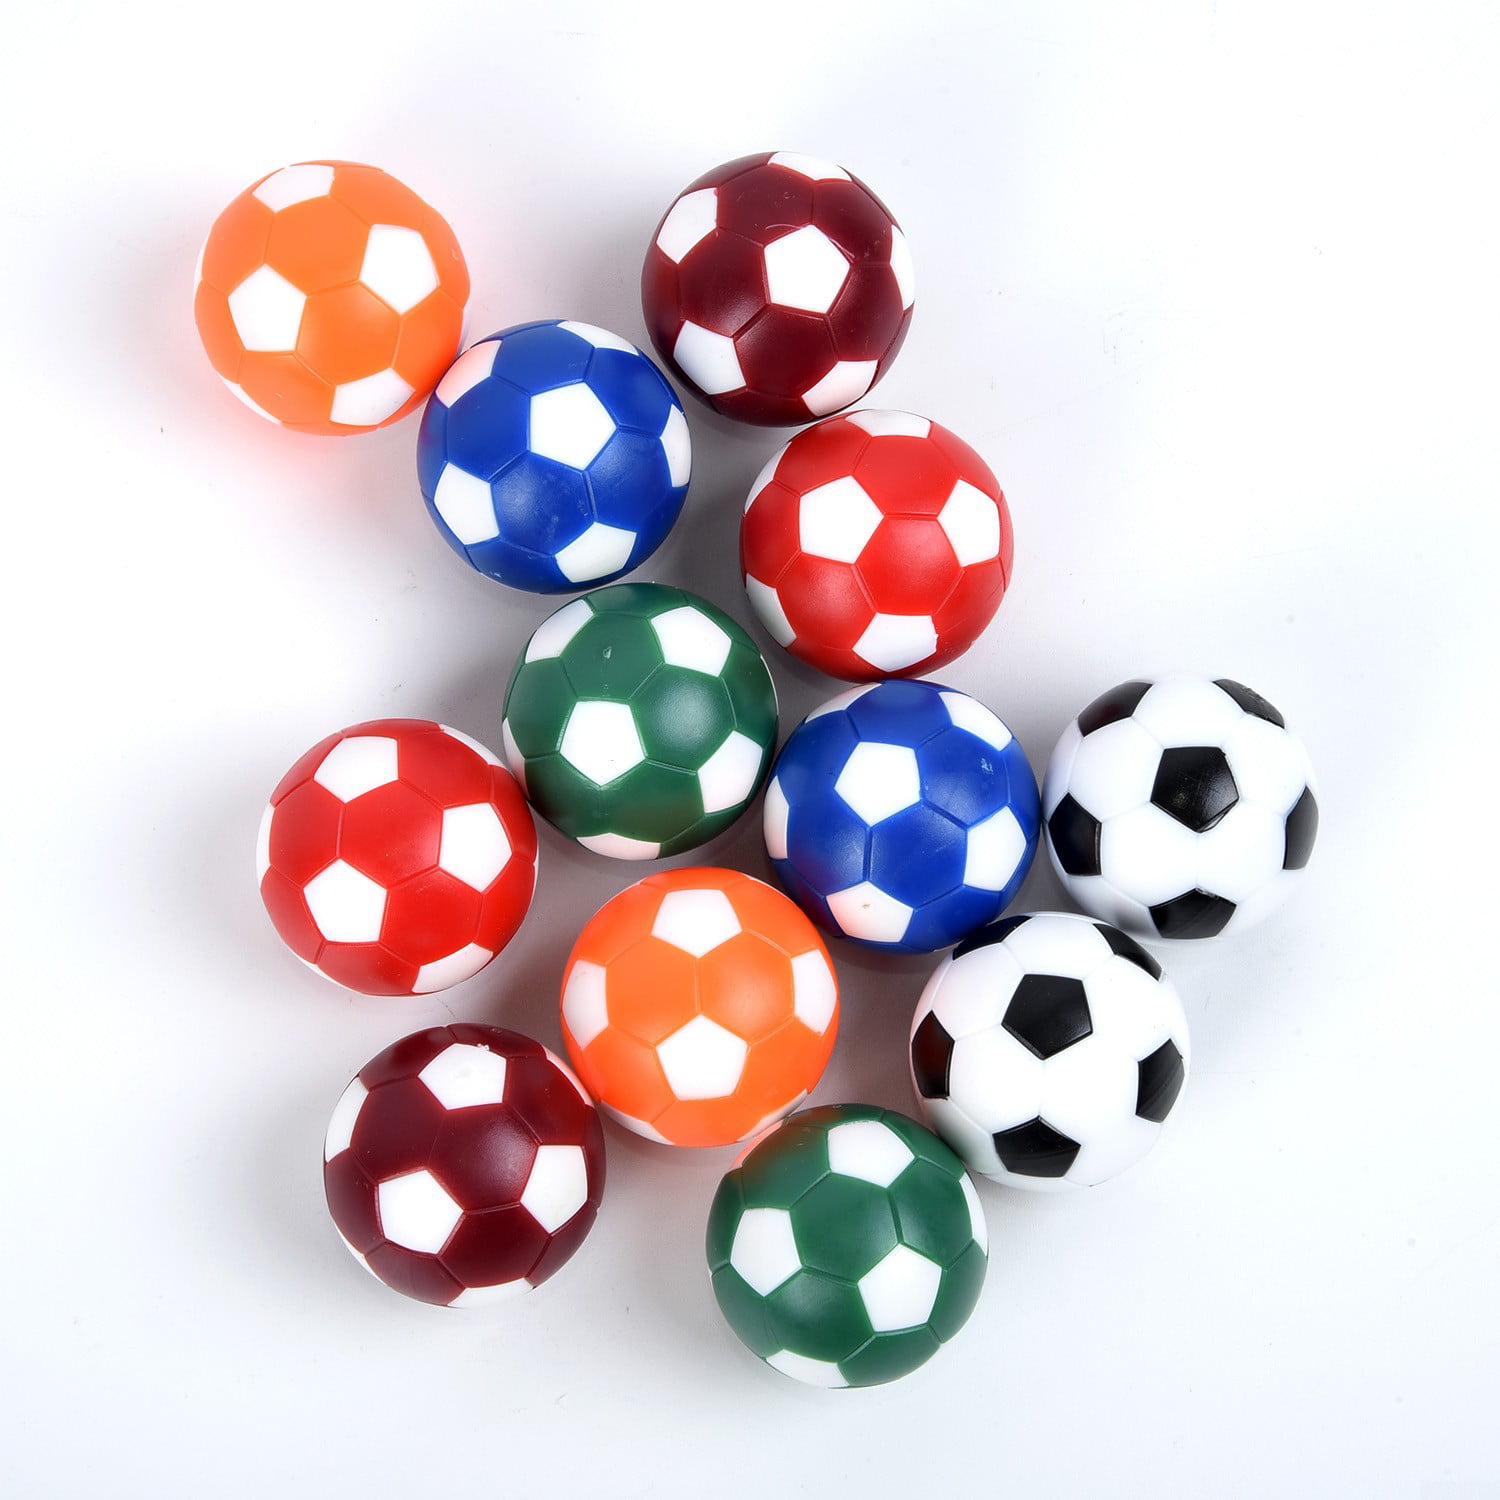 12pcs Table Soccer Footballs Replacement Balls Interesting Mini Tabletop Soccer 